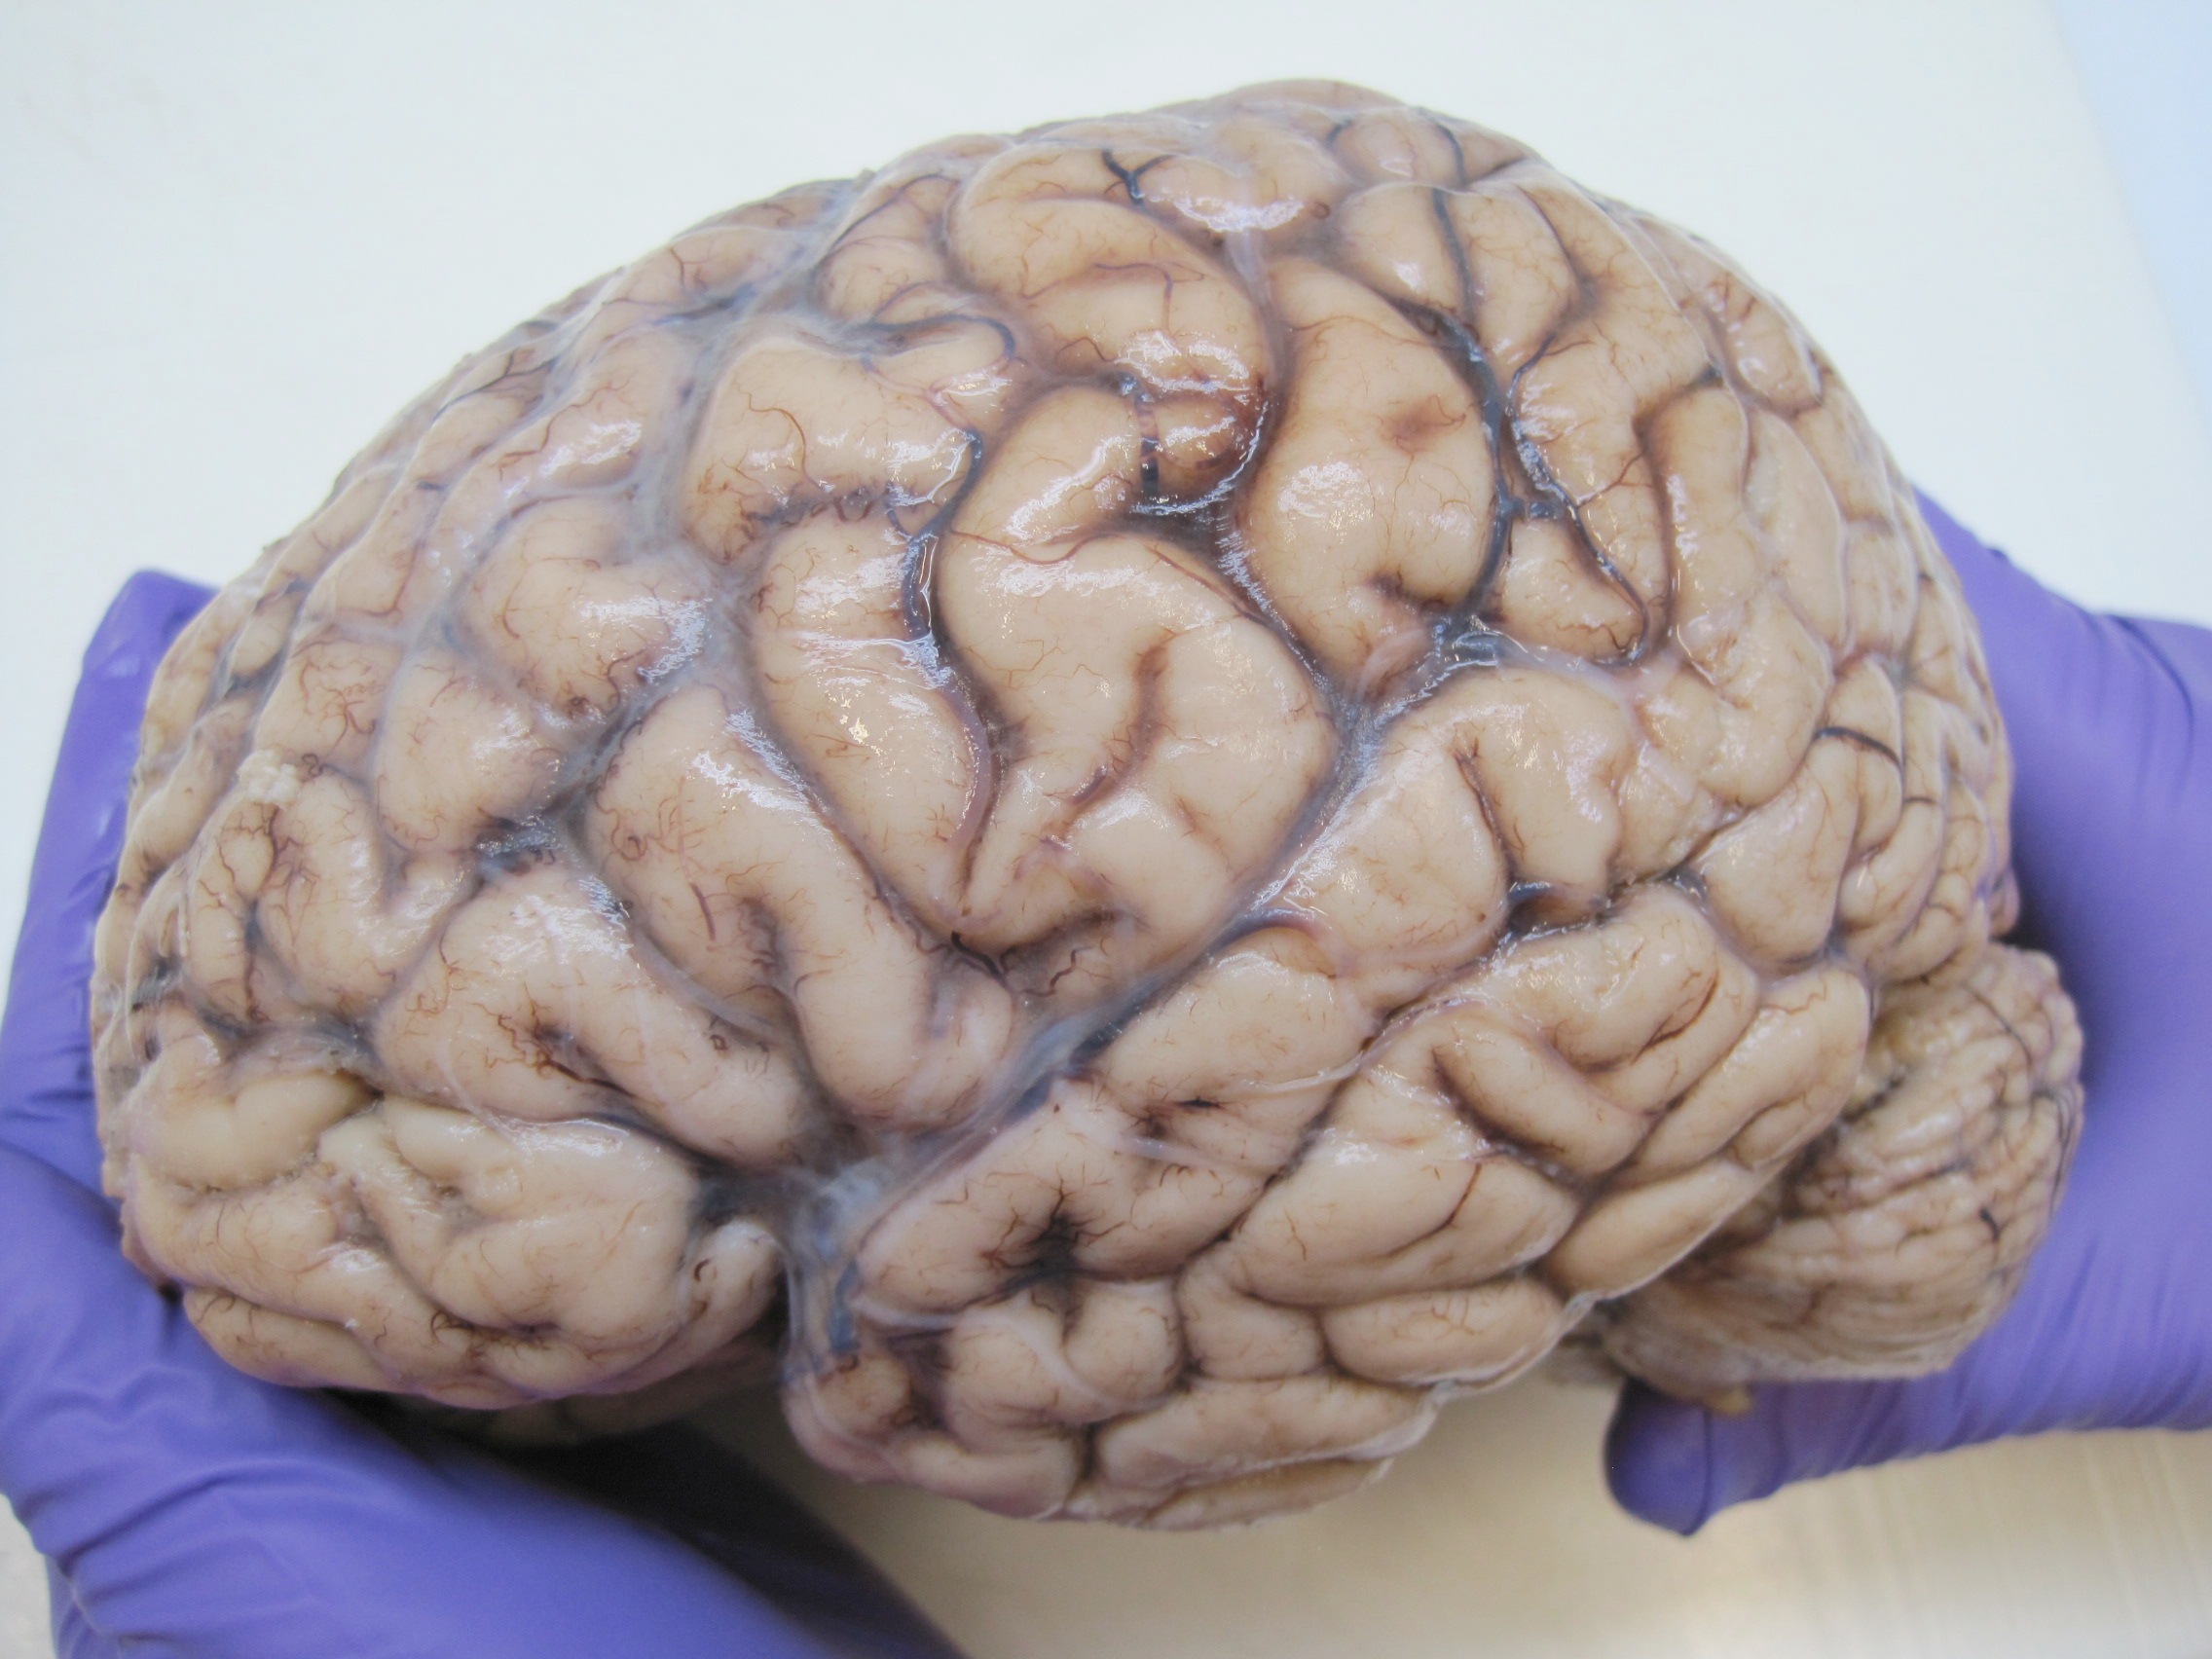 Human brain - Wikipedia